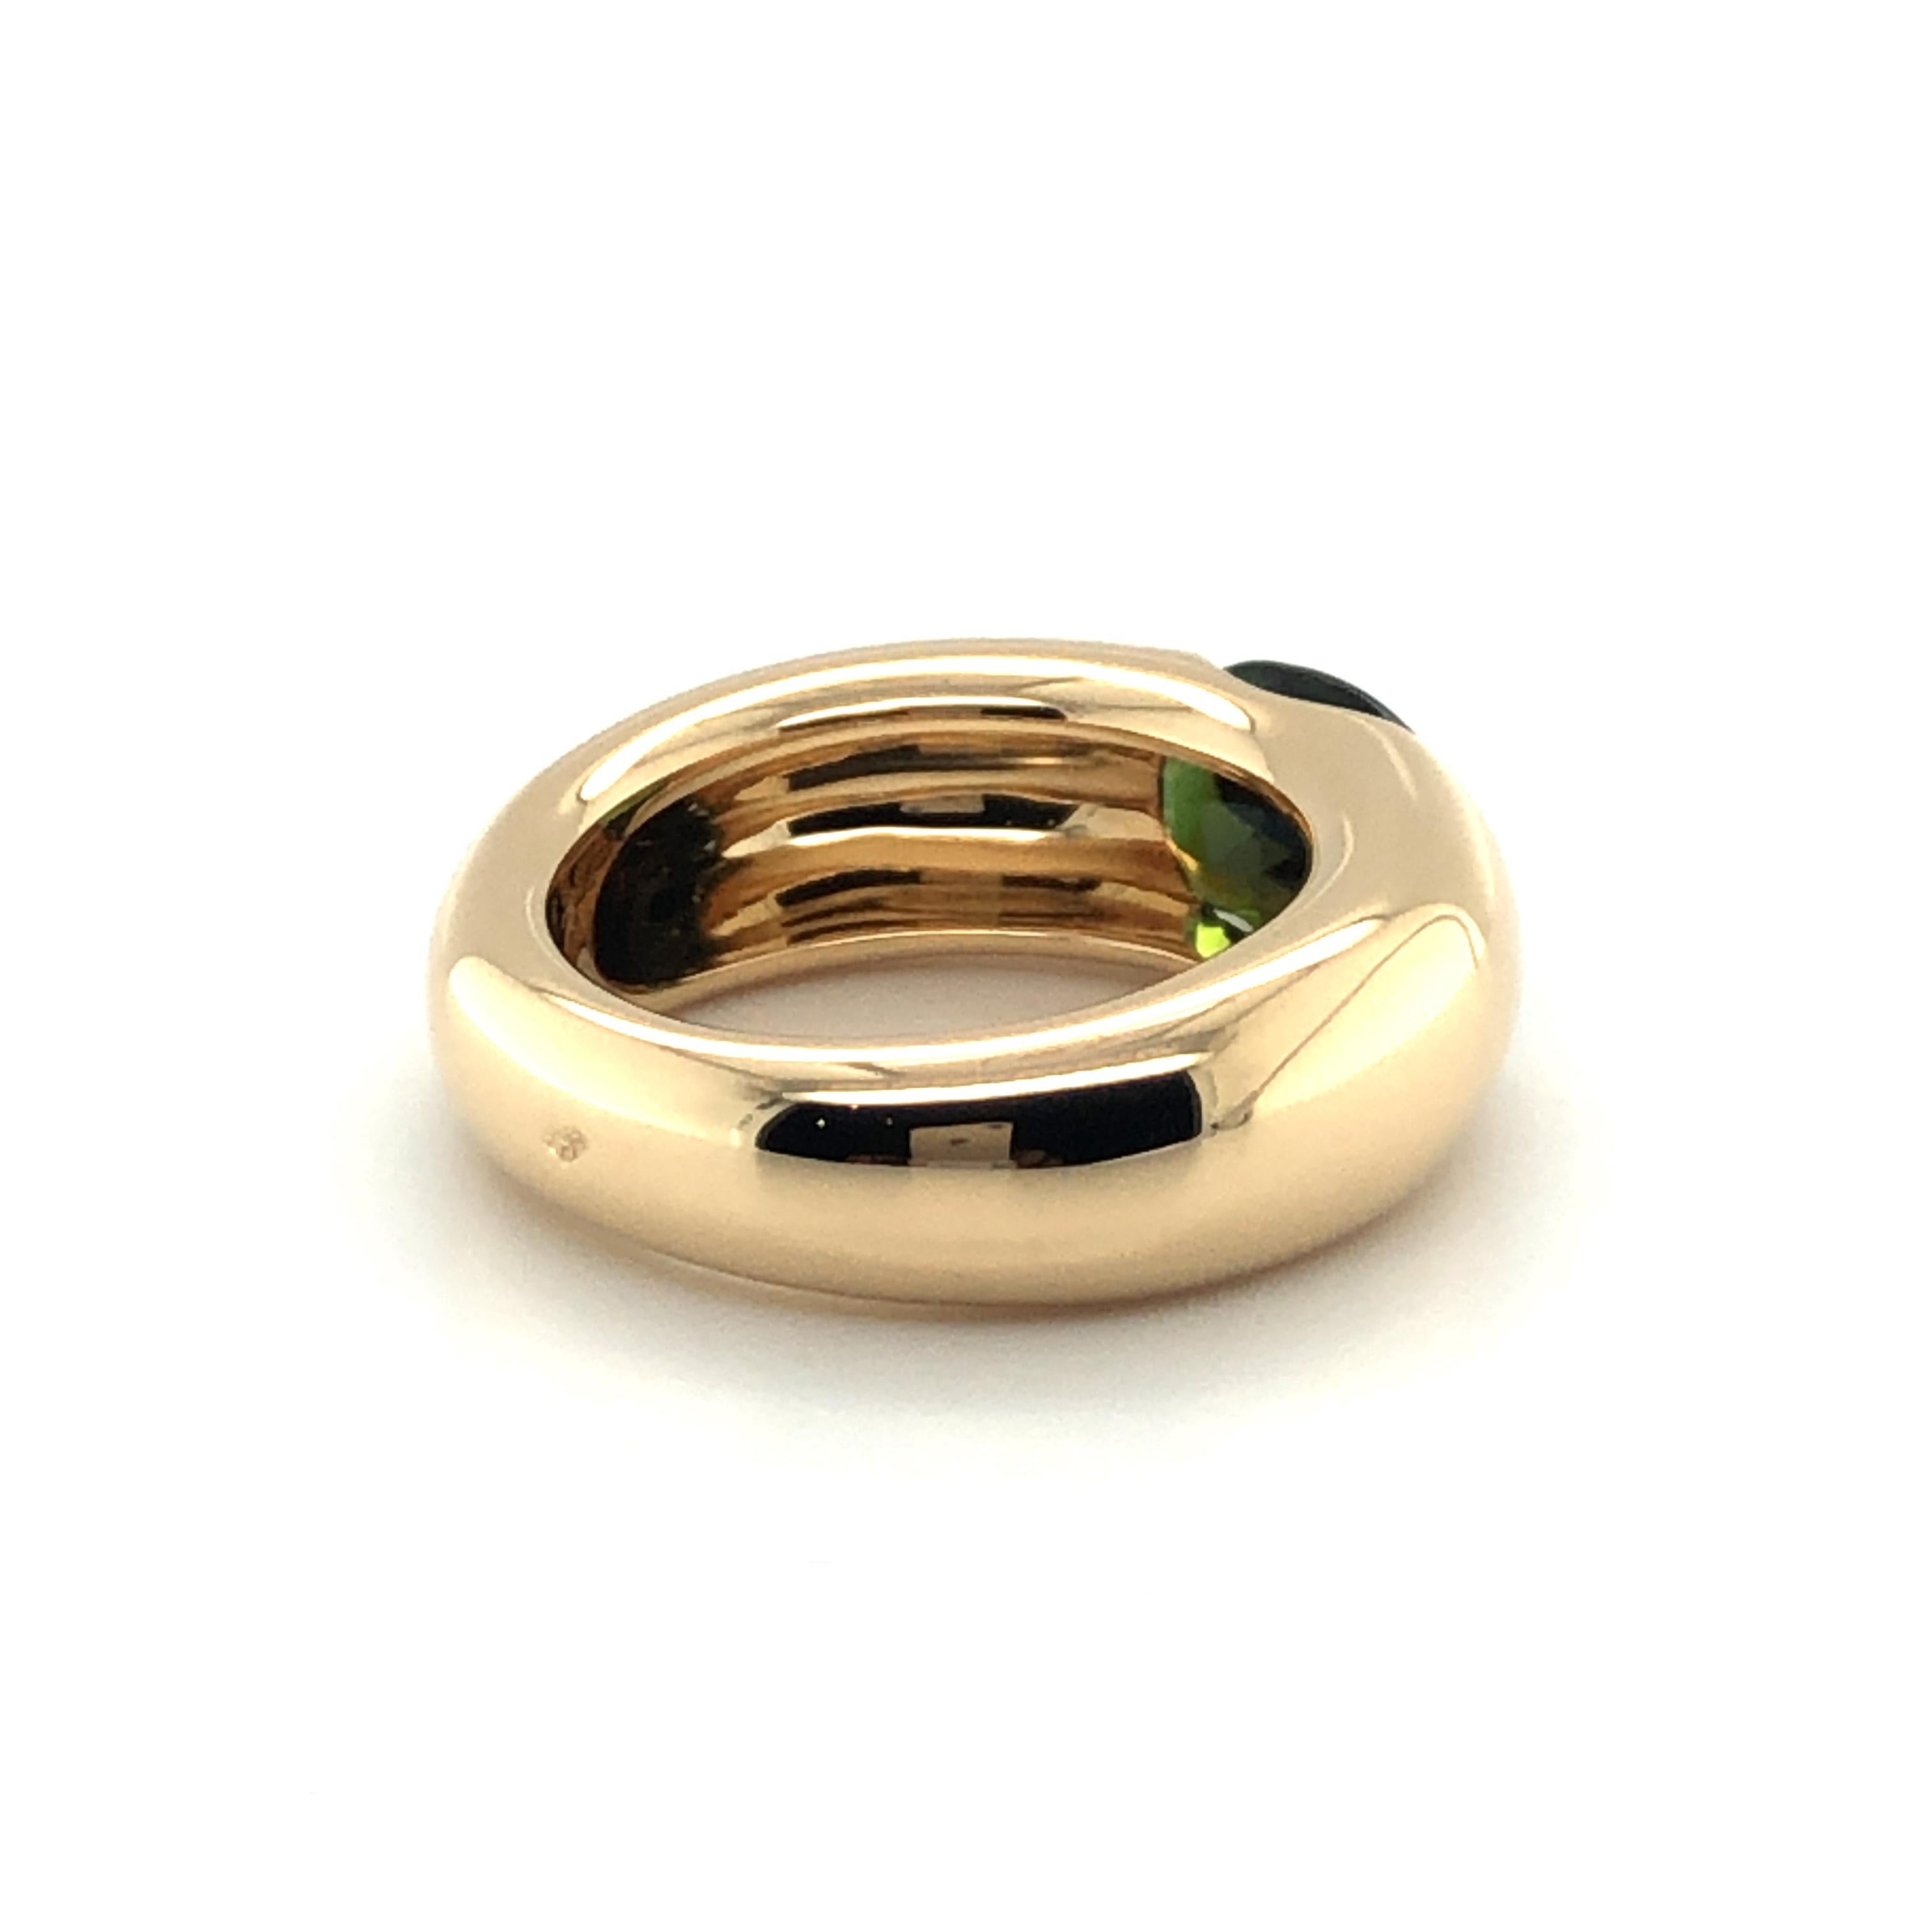 Oval Cut Cartier Green Tourmaline Ring in 18 Karat Yellow Gold